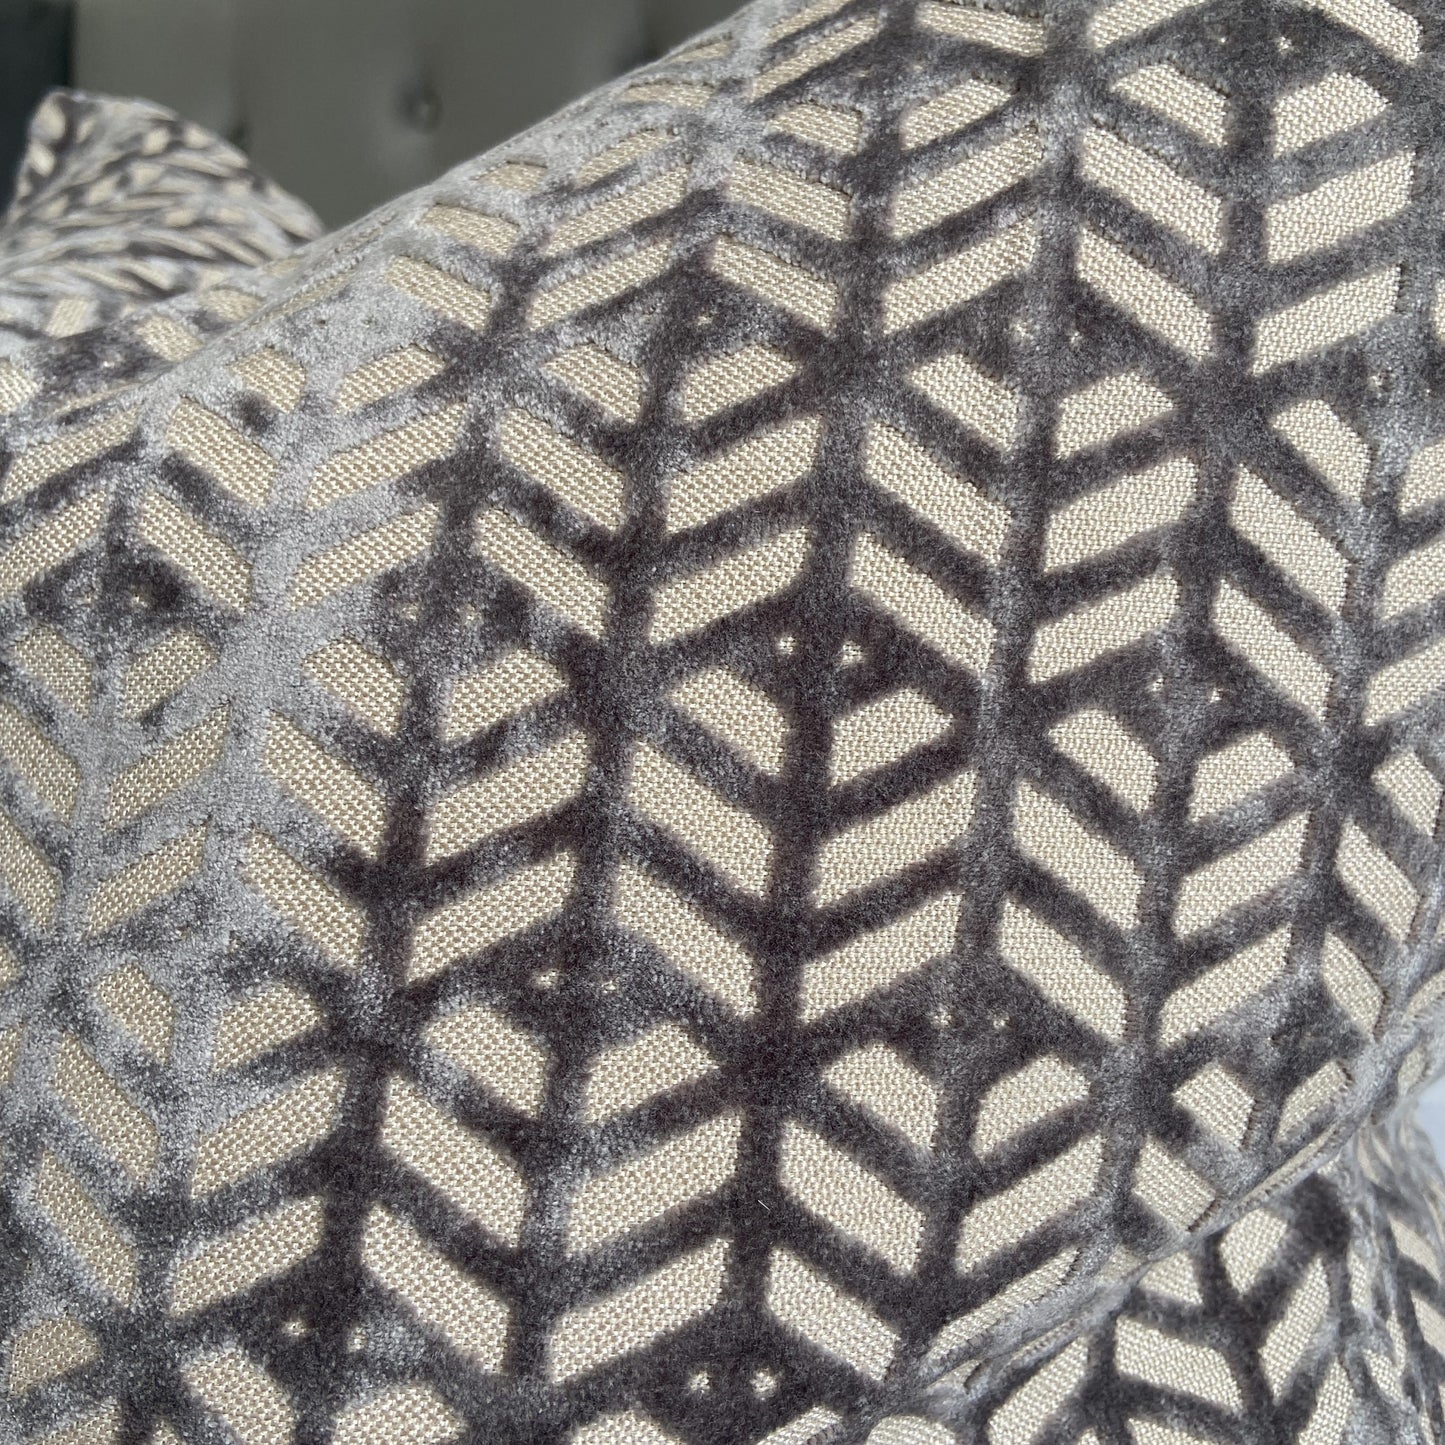 Malini Large Cream & Grey Geometric Cushion